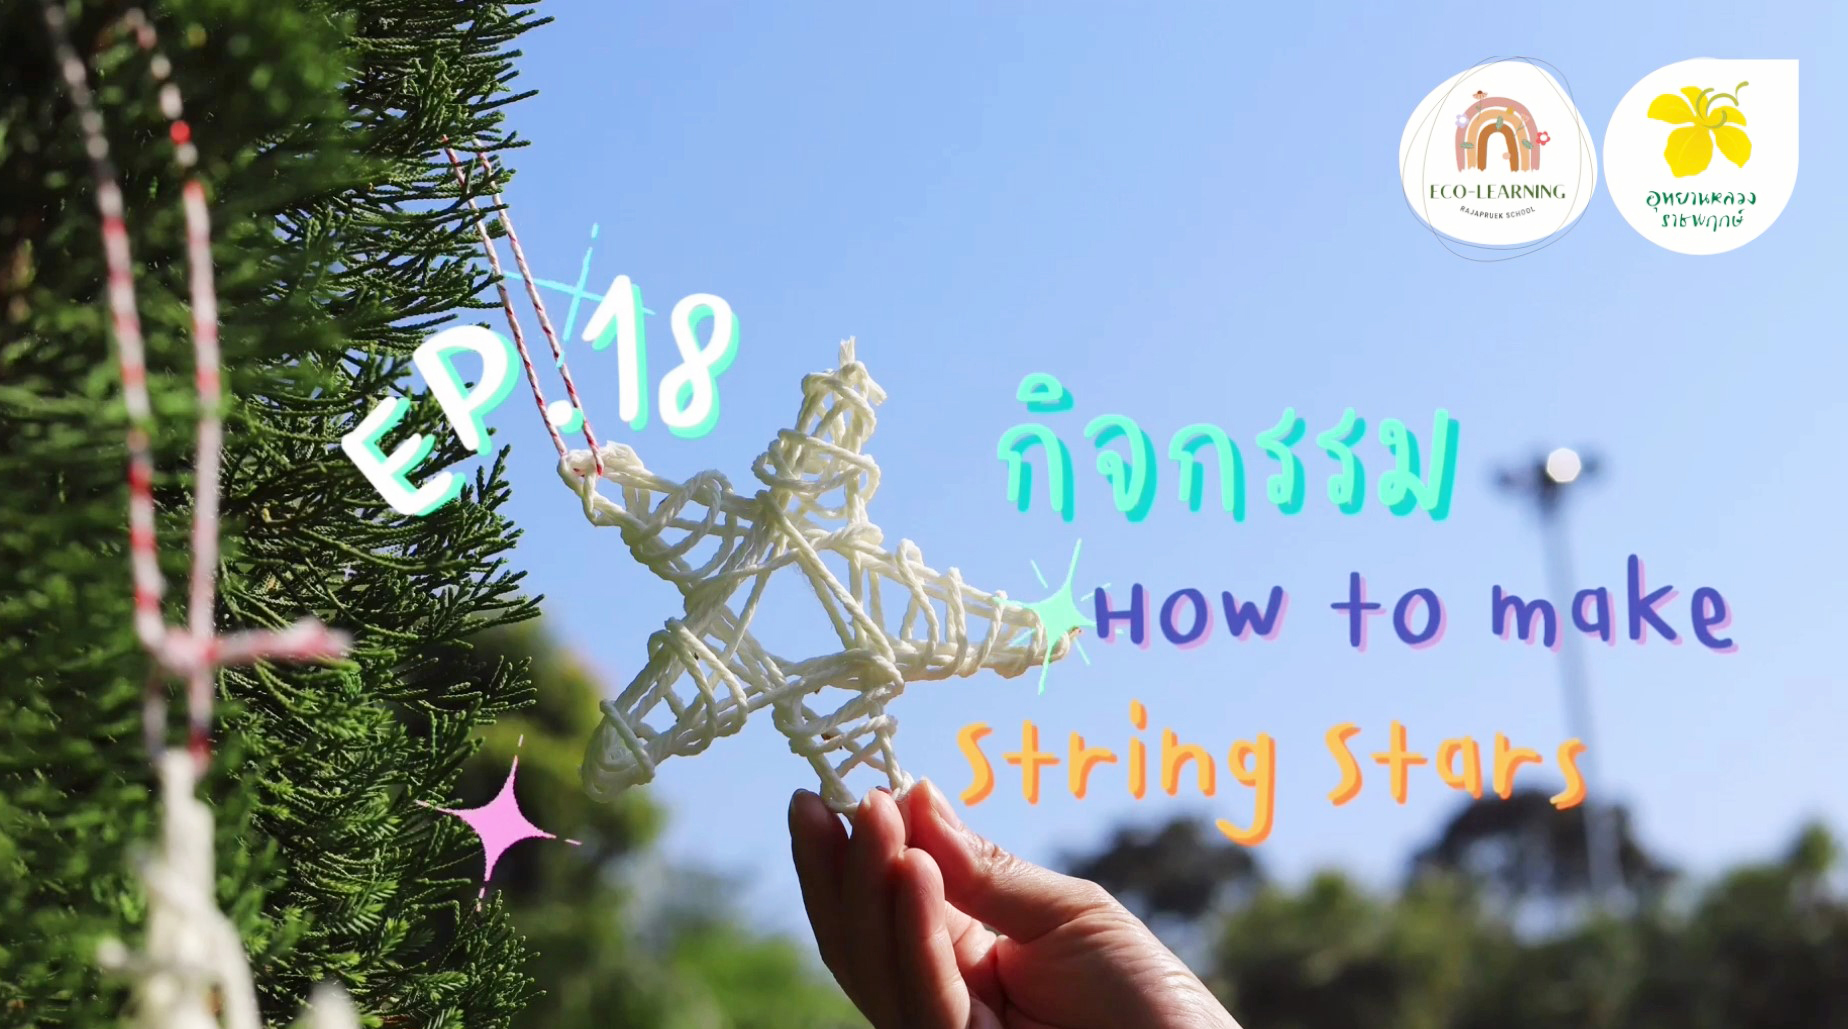 How to make “String Stars” | Eco-learning with Rajapruek School